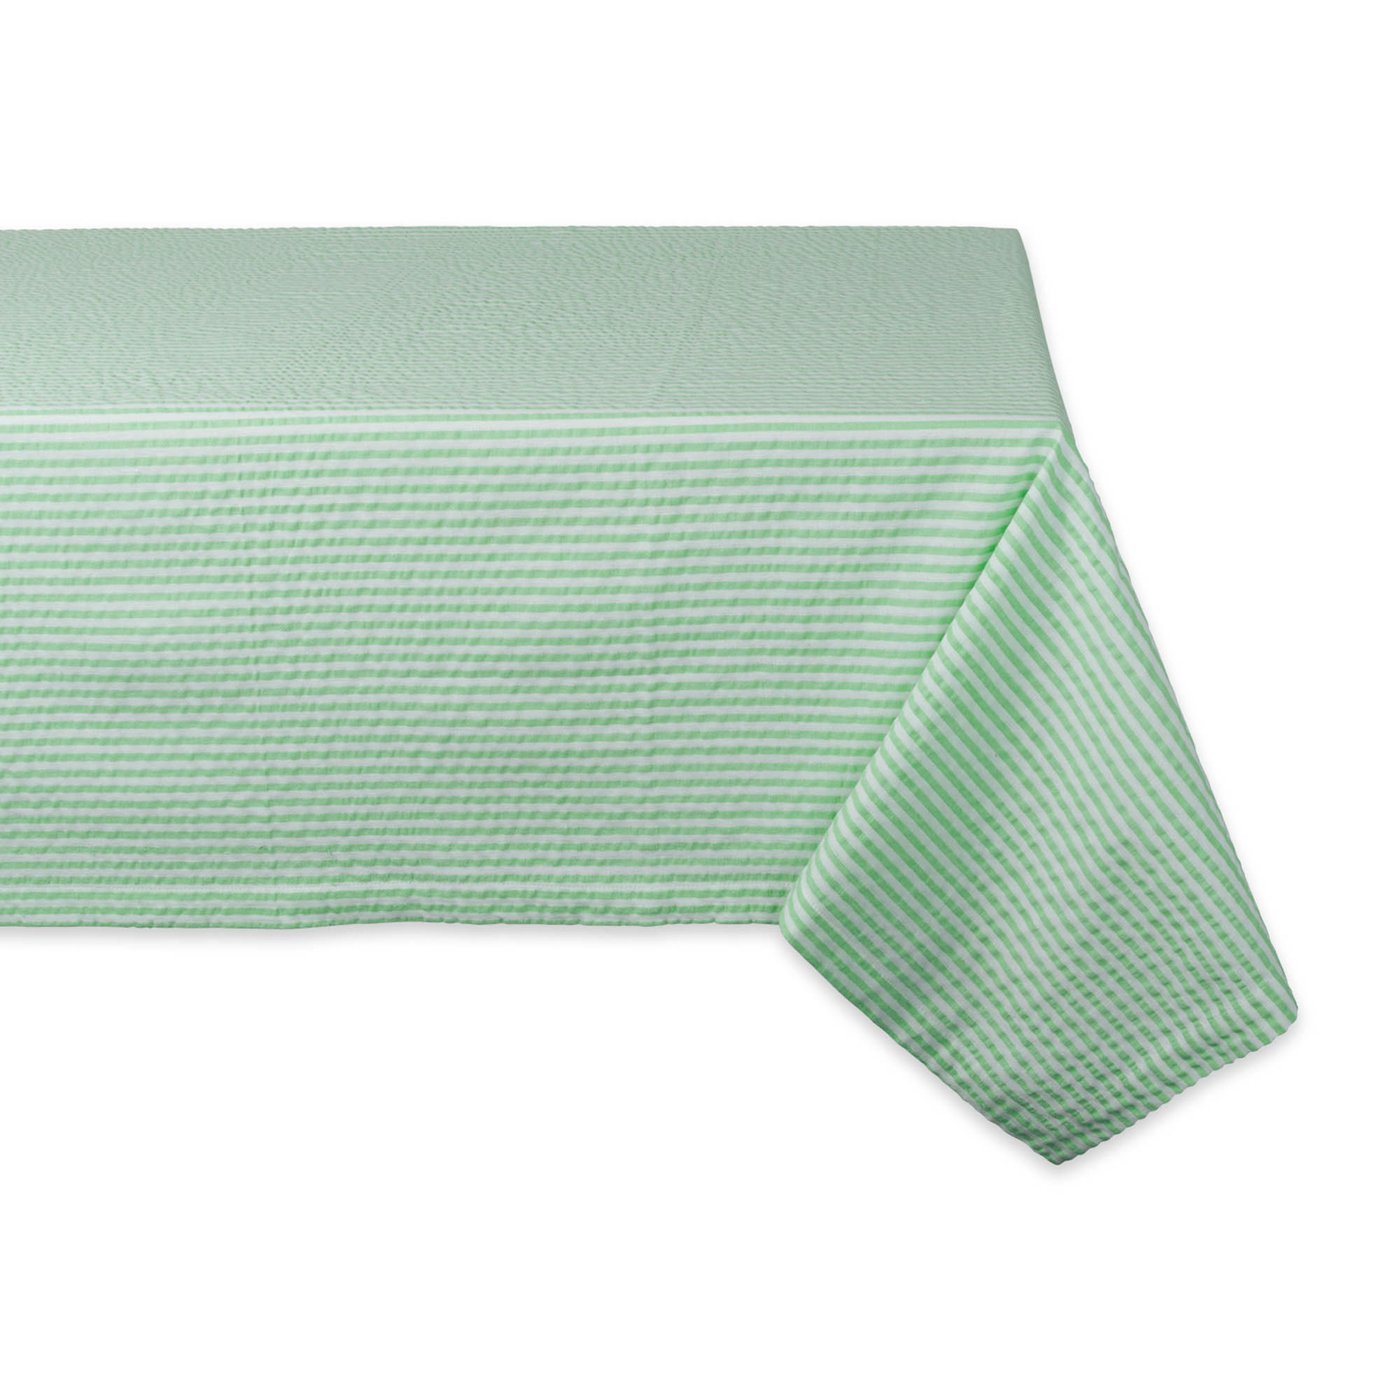 Bright Green Seersucker Tablecloth